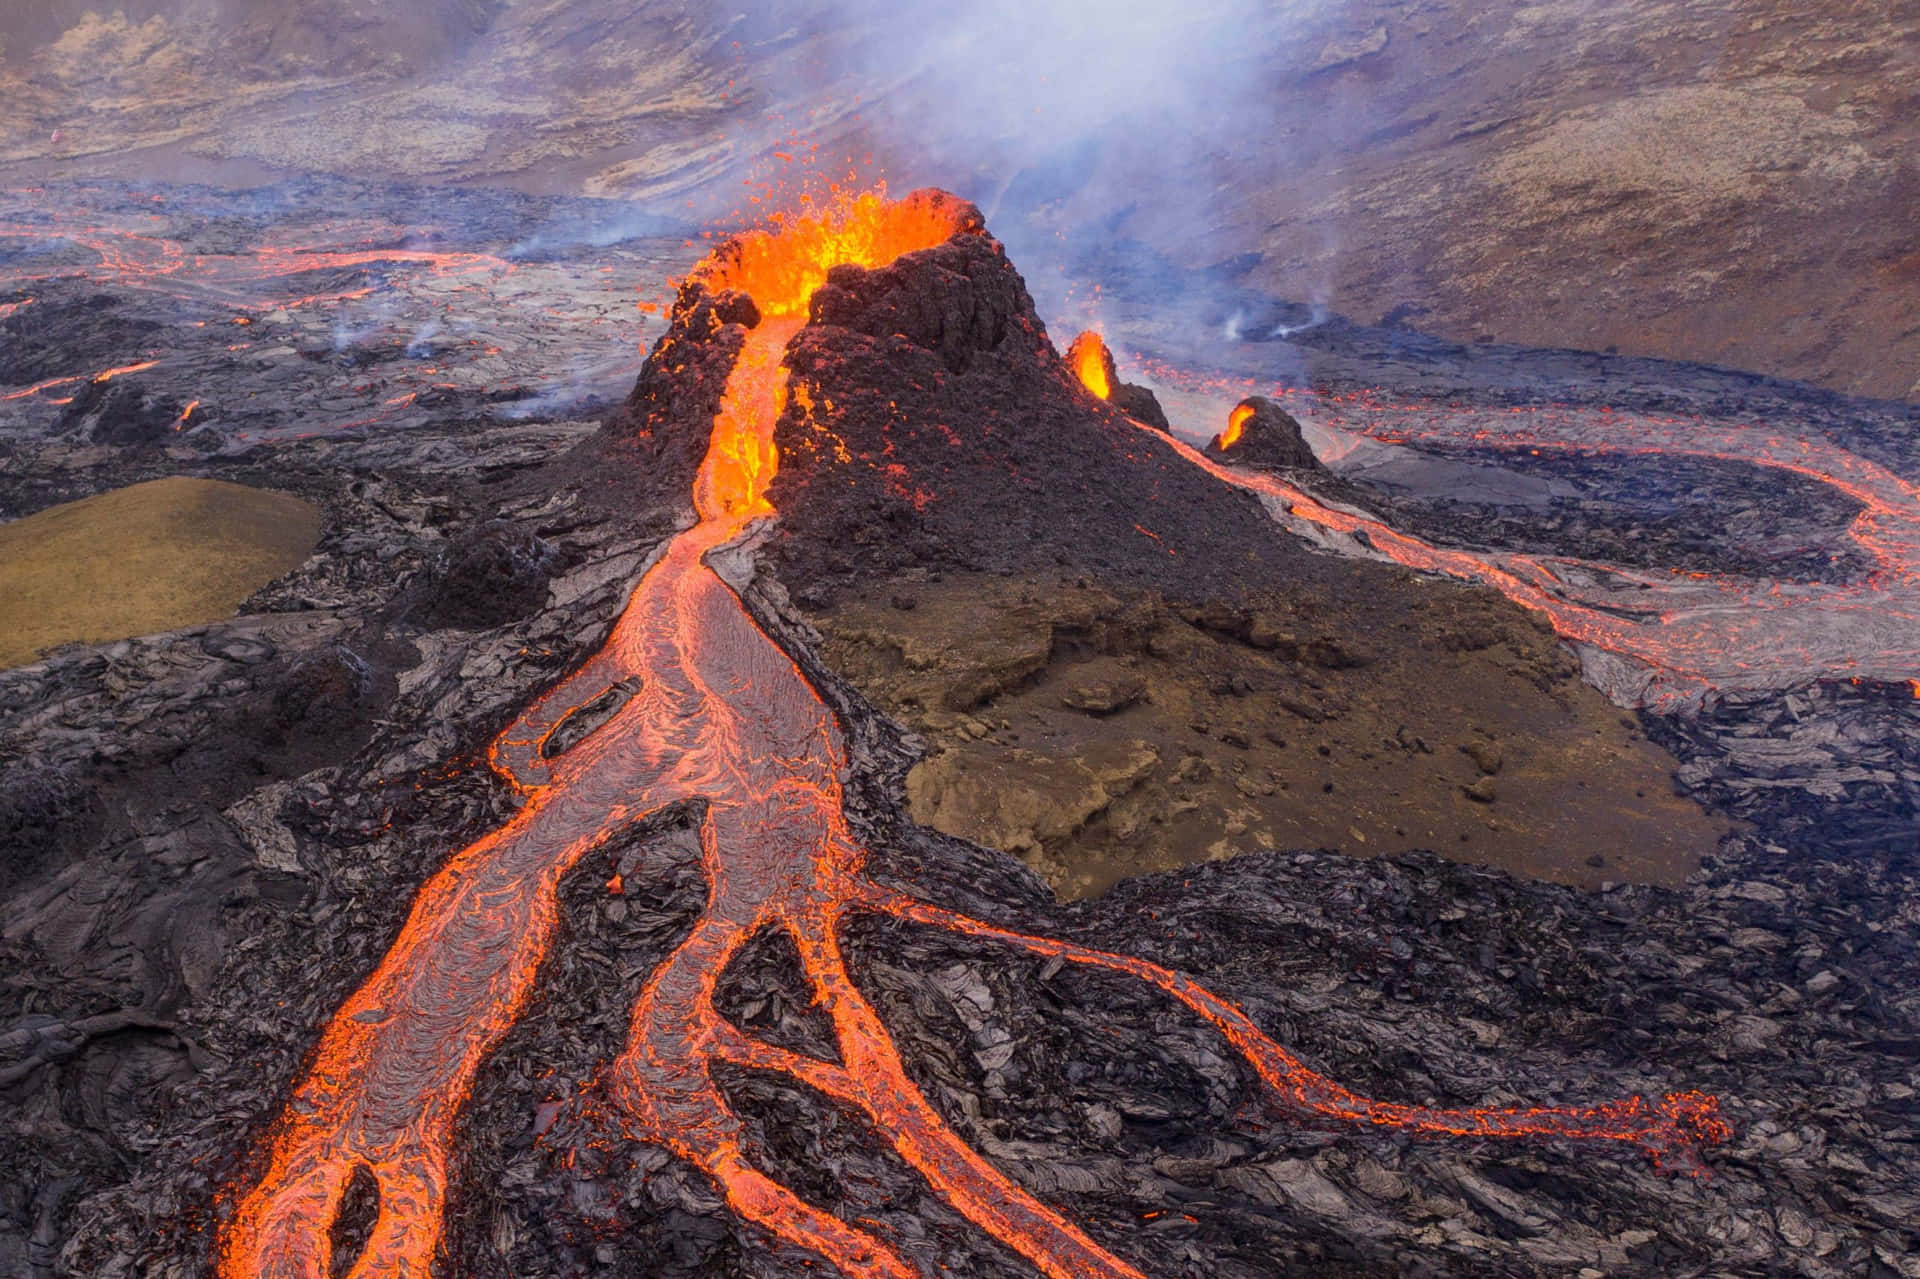 Etbetagende Luftfoto Af En Vulkan.